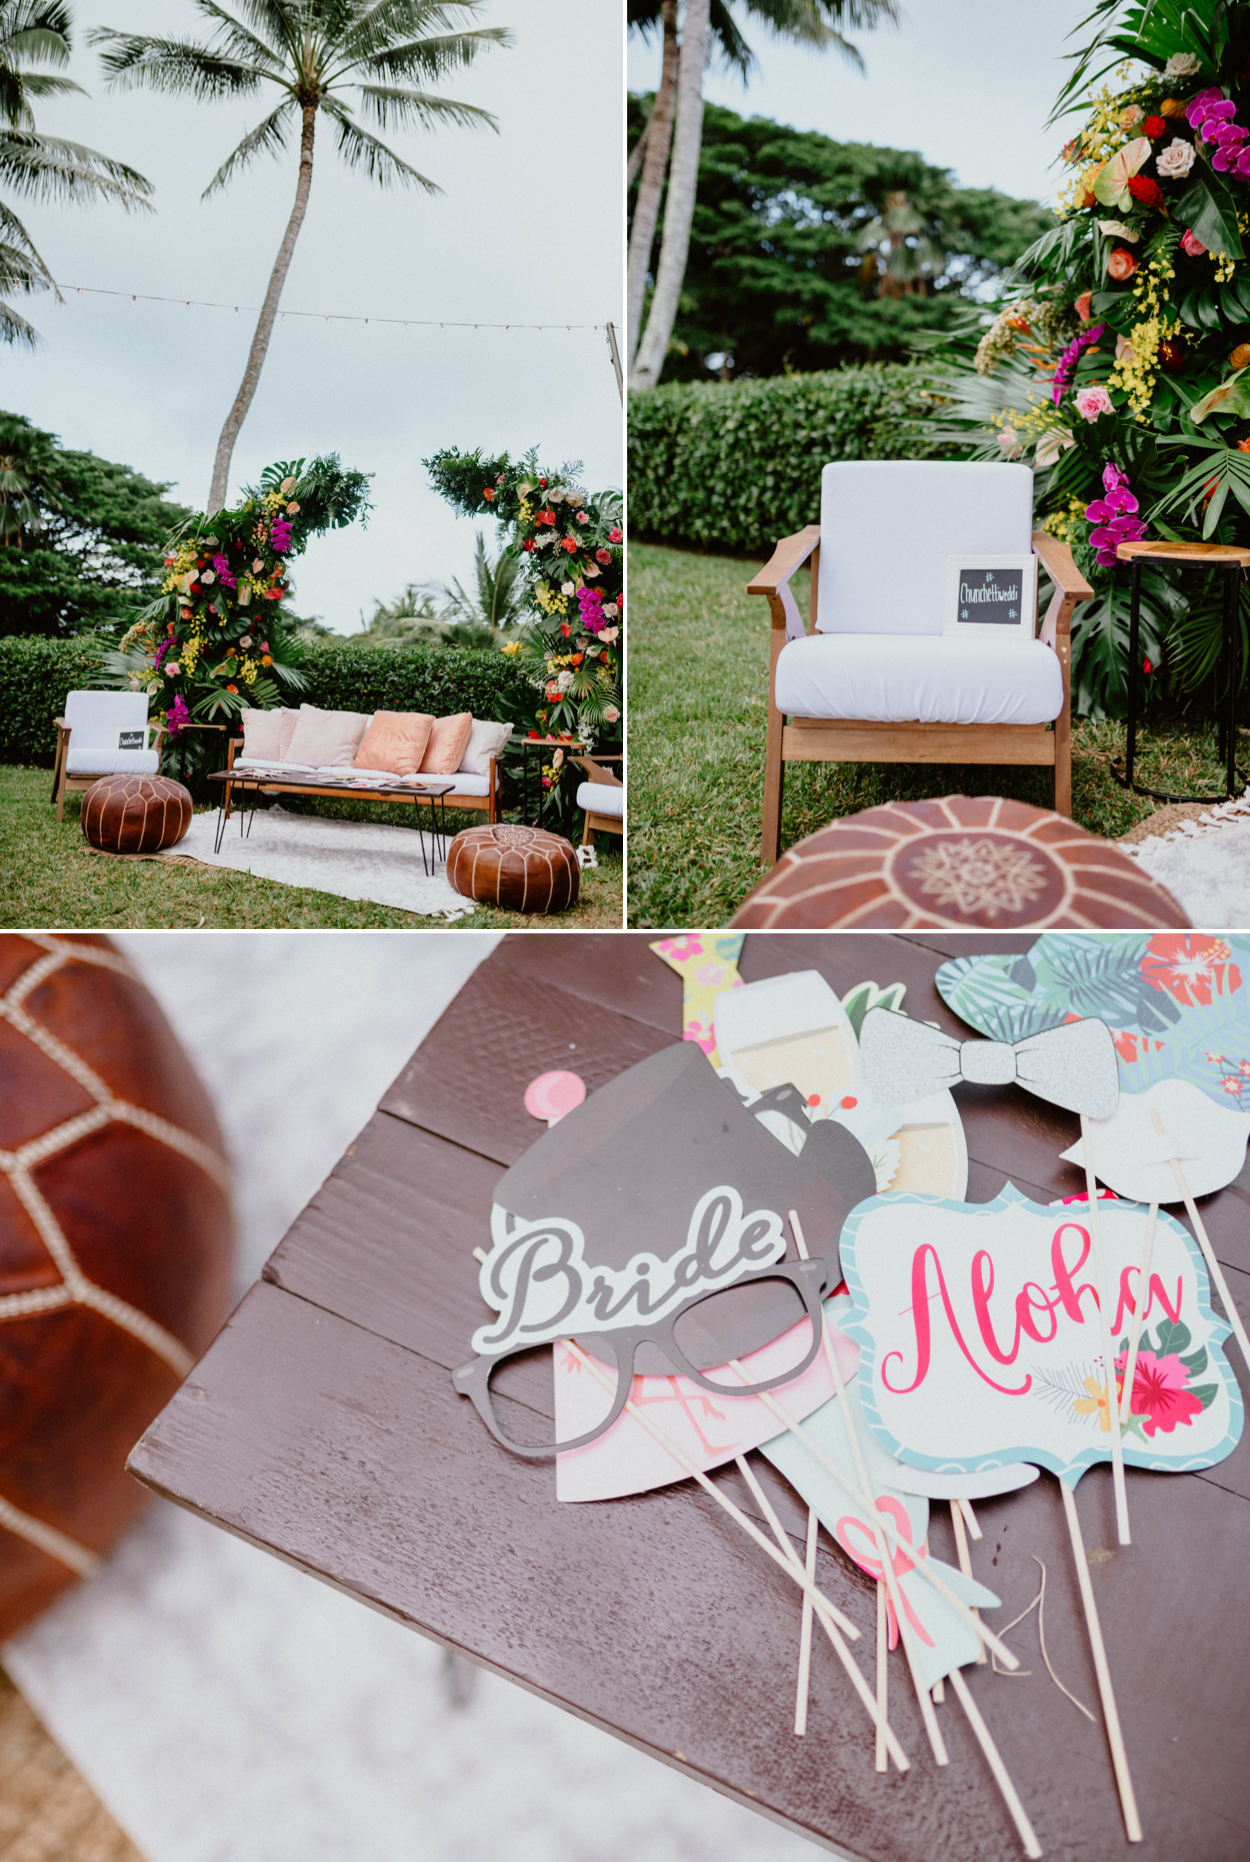 Moli'i fishpond Hawaii wedding rentals from aloha artisans